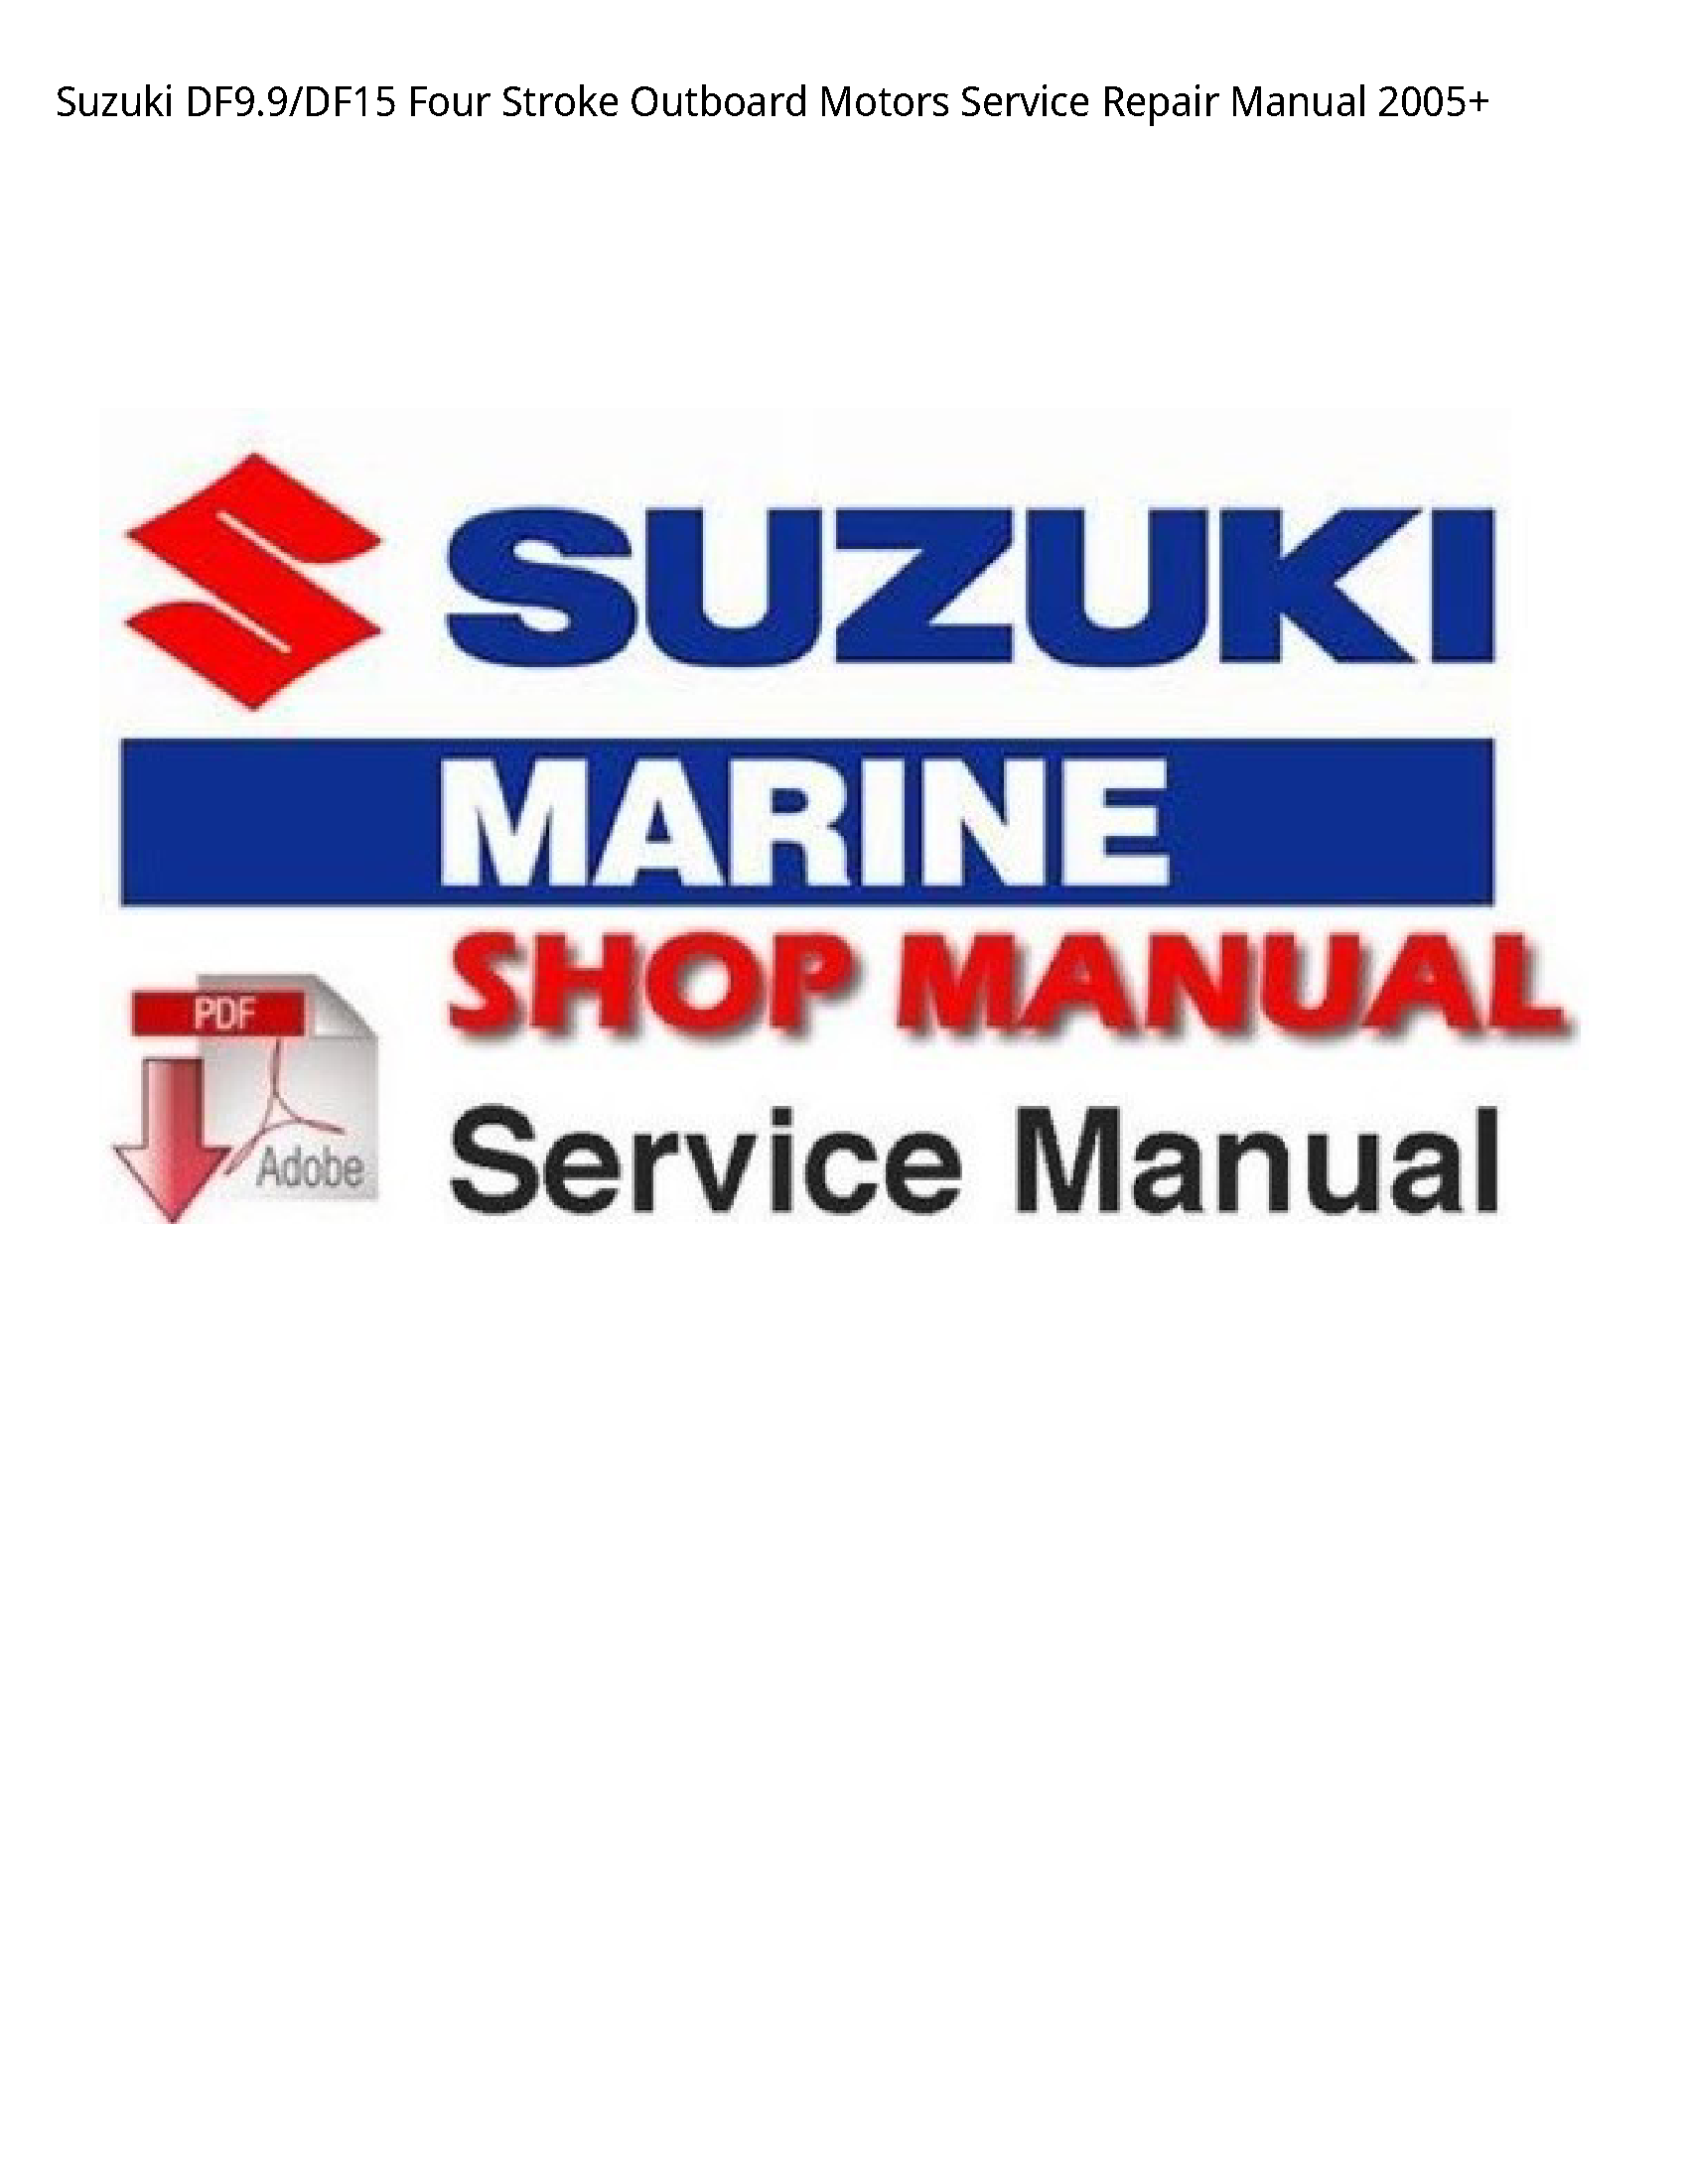 Suzuki DF9.9 Four Stroke Outboard Motors manual